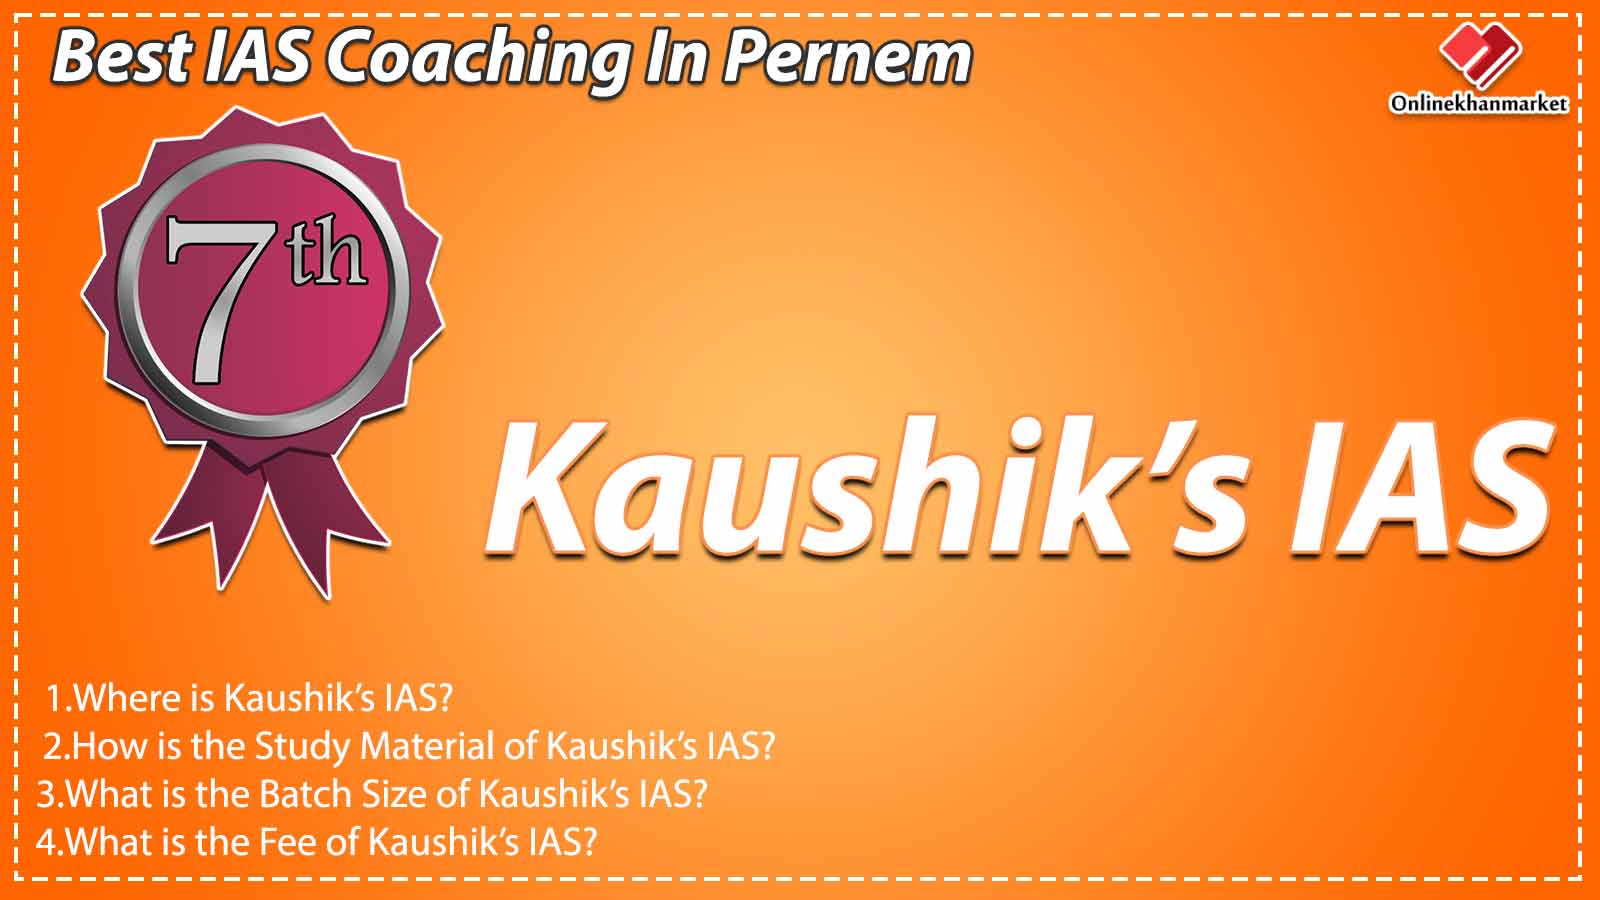 IAS Coaching in Pernem